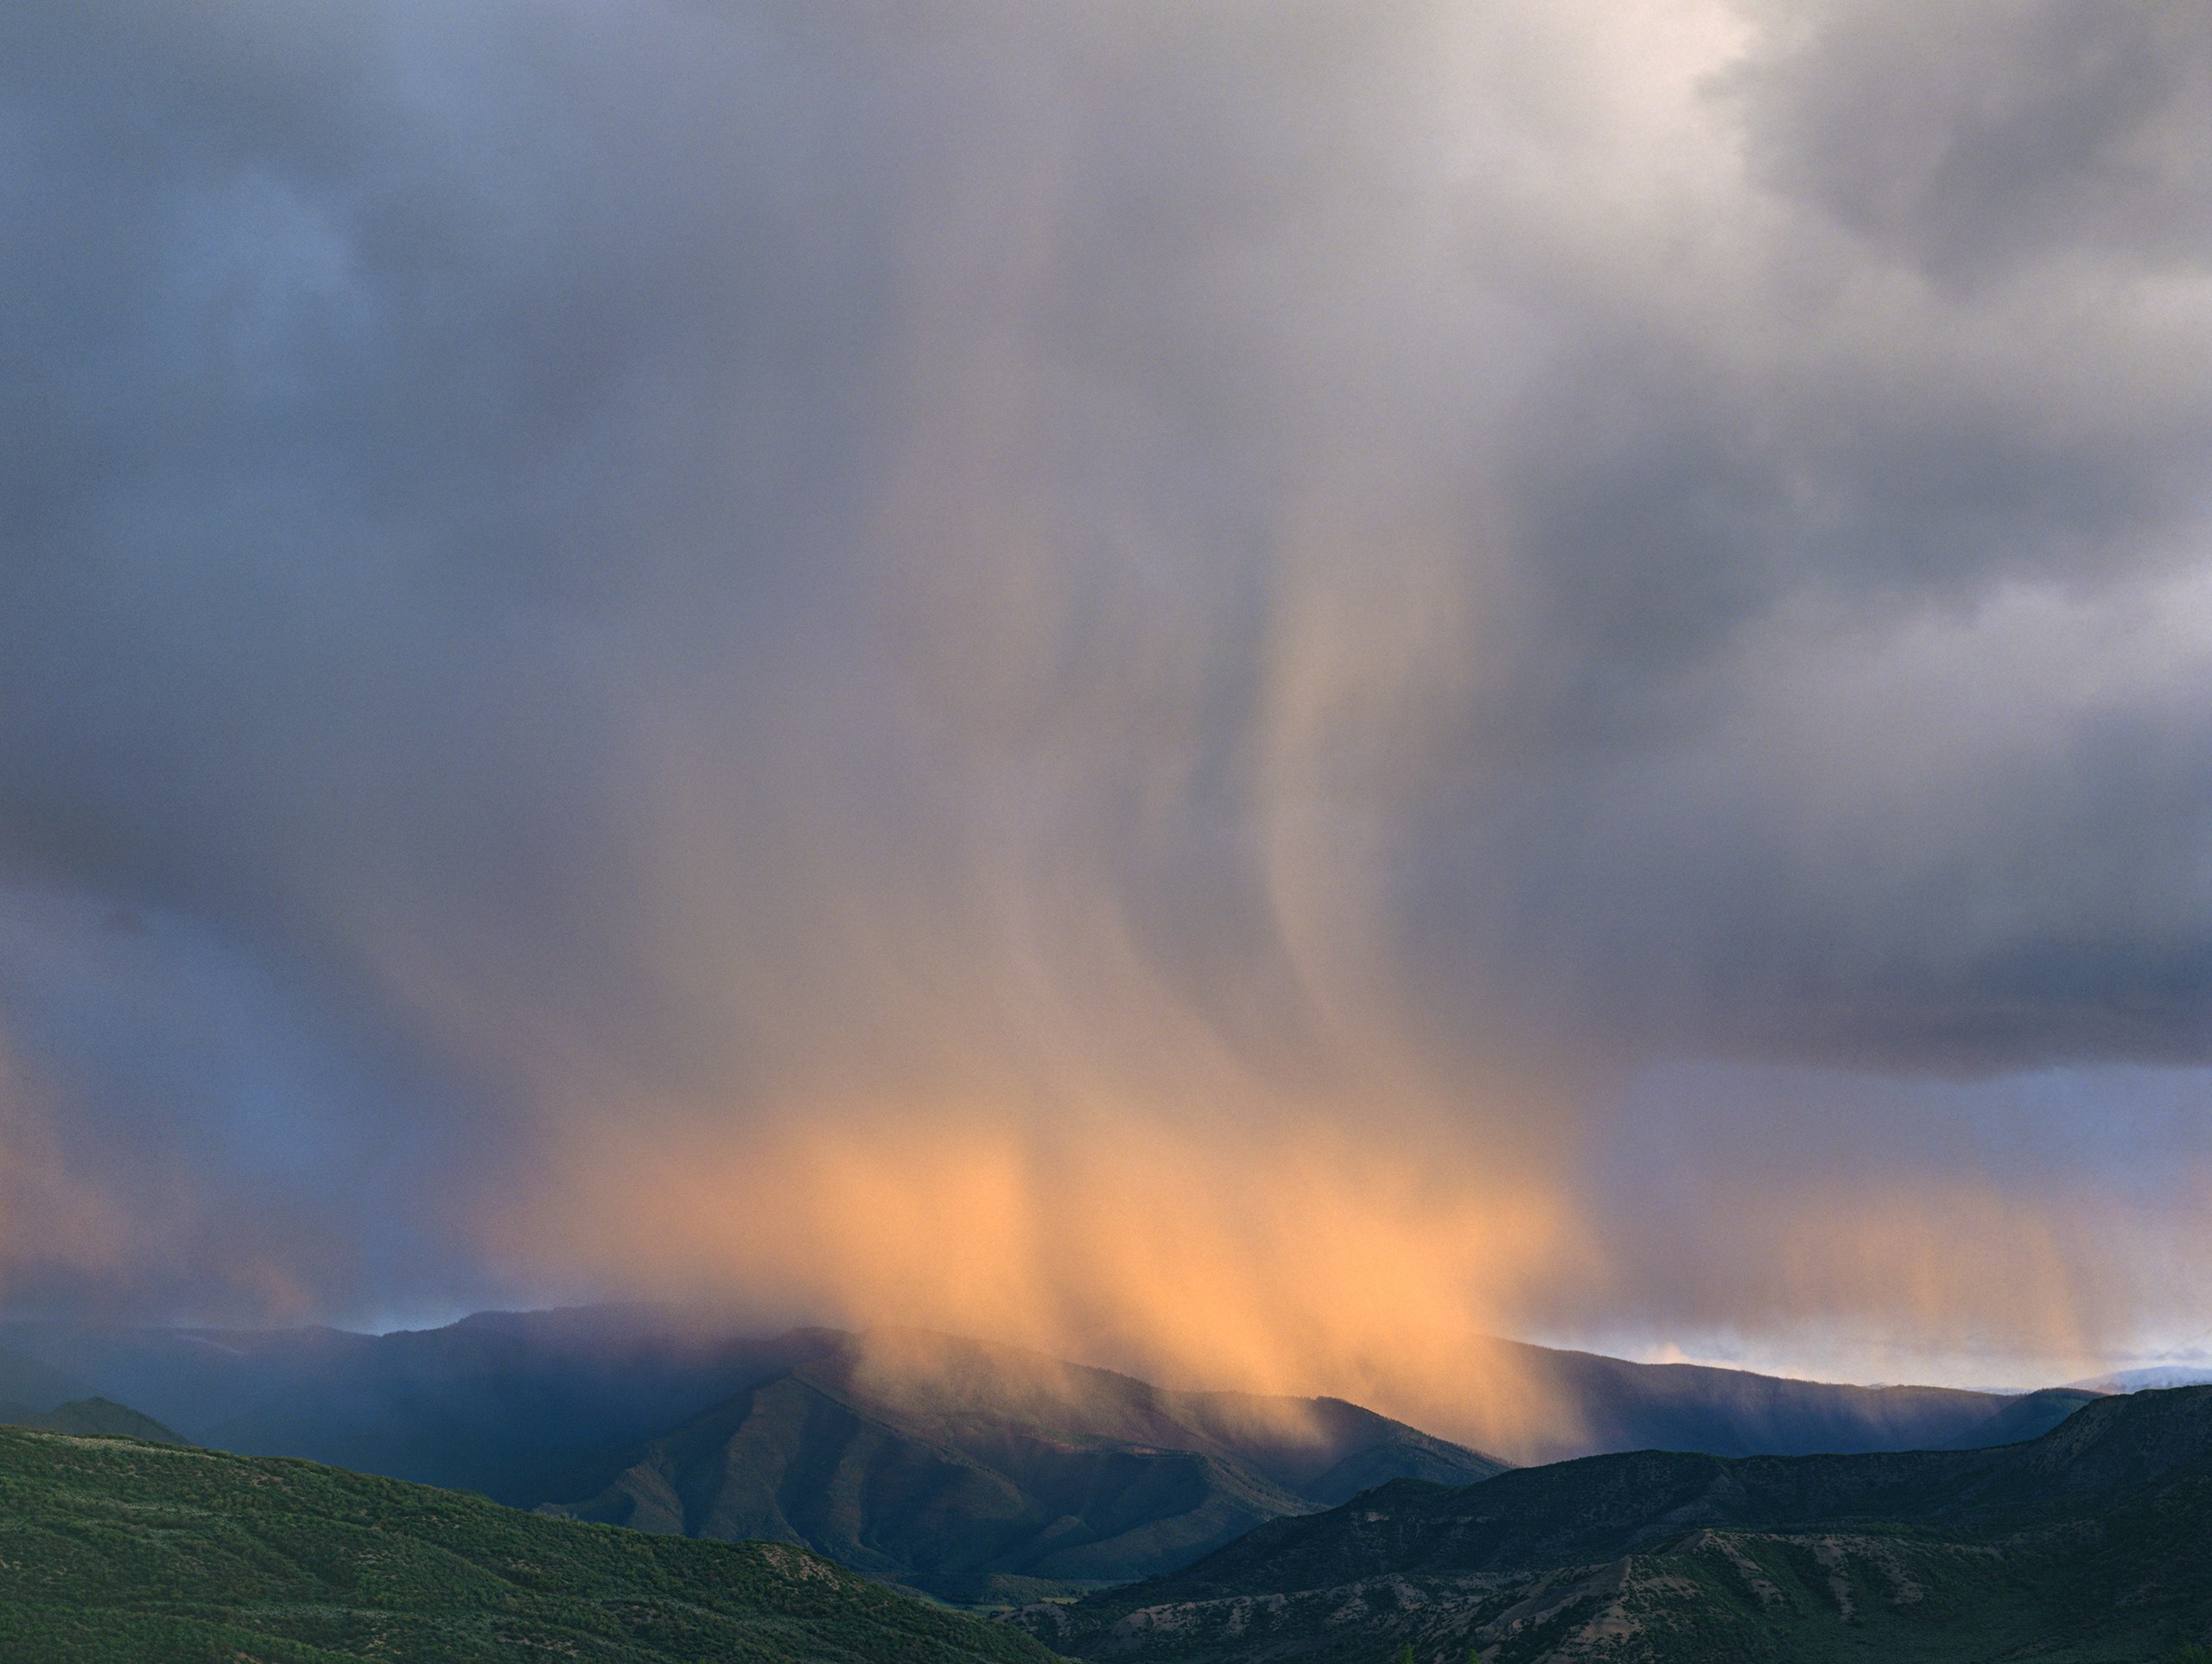 Rainshower, Roaring Fork Valley, Colorado 